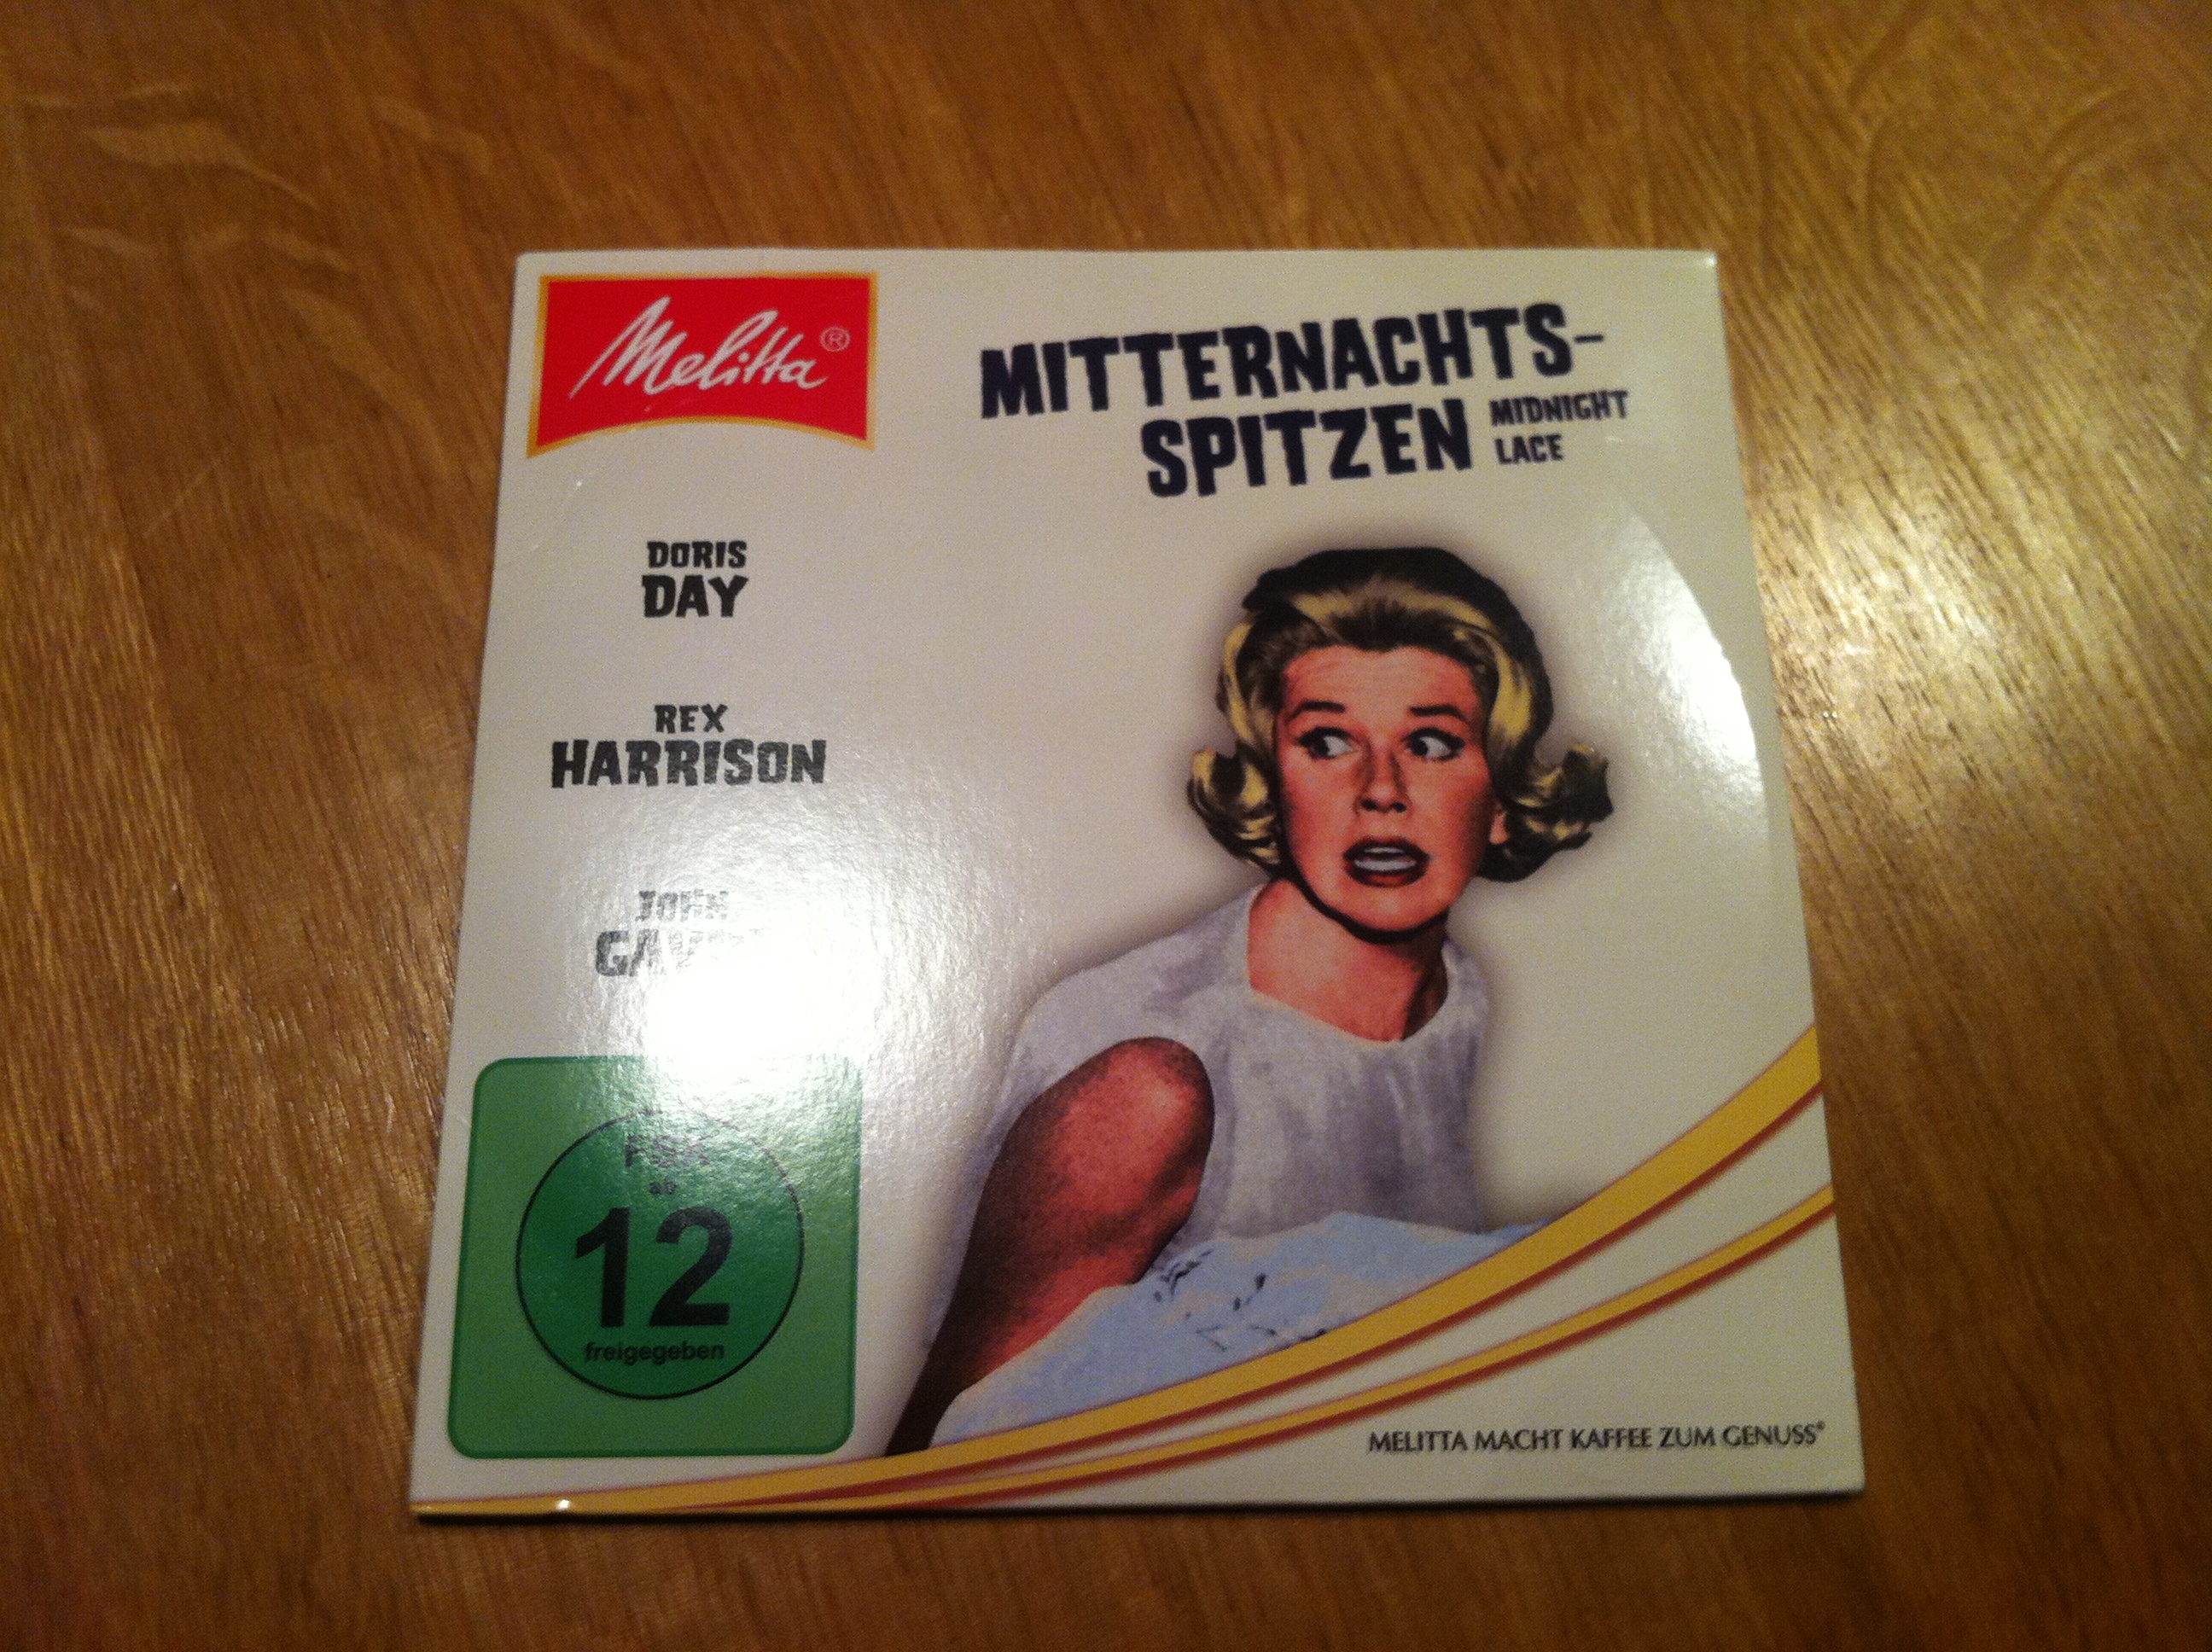 Melitta on pack promotion DVD mit Doris Day Mitternachts Spitzen